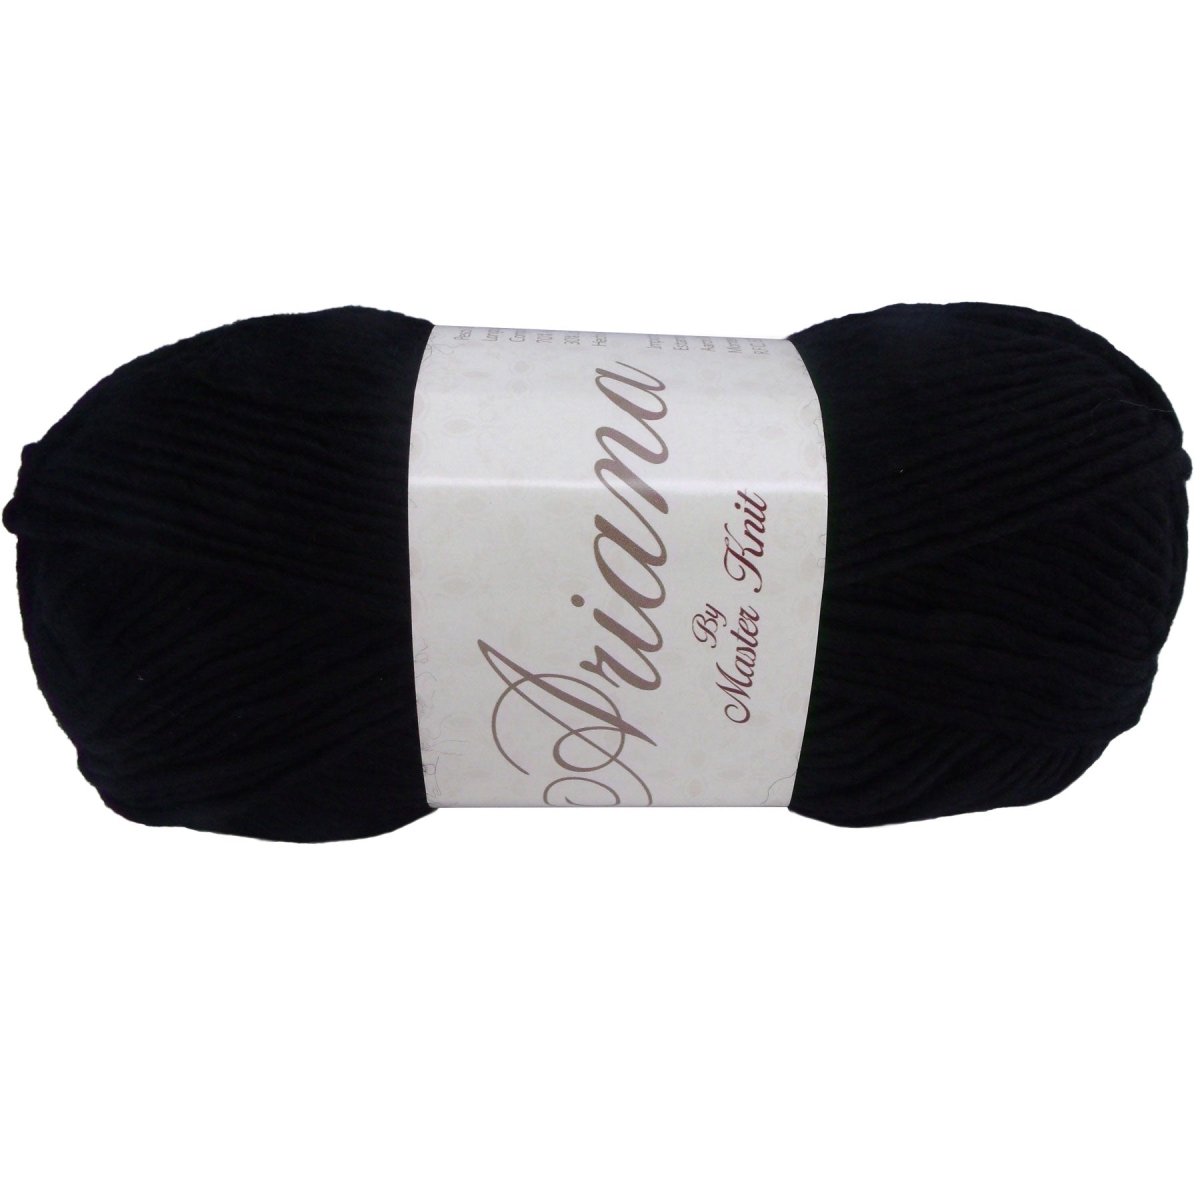 ARIANA - Aran - Crochetstores9510-300